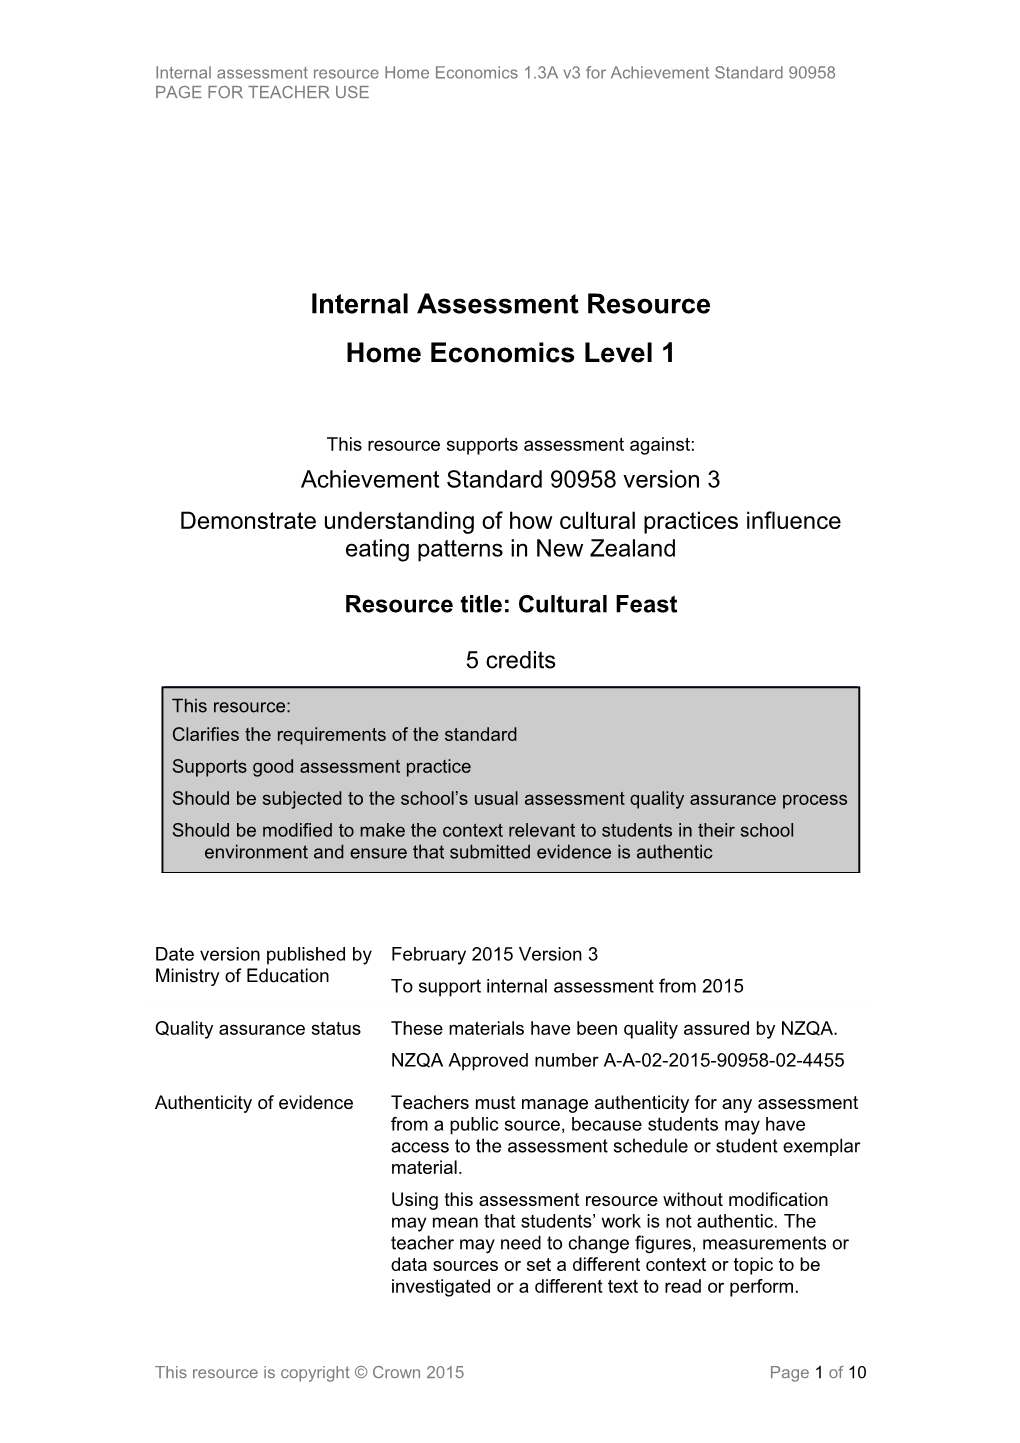 Level 1 Home Economics Internal Assessment Resource